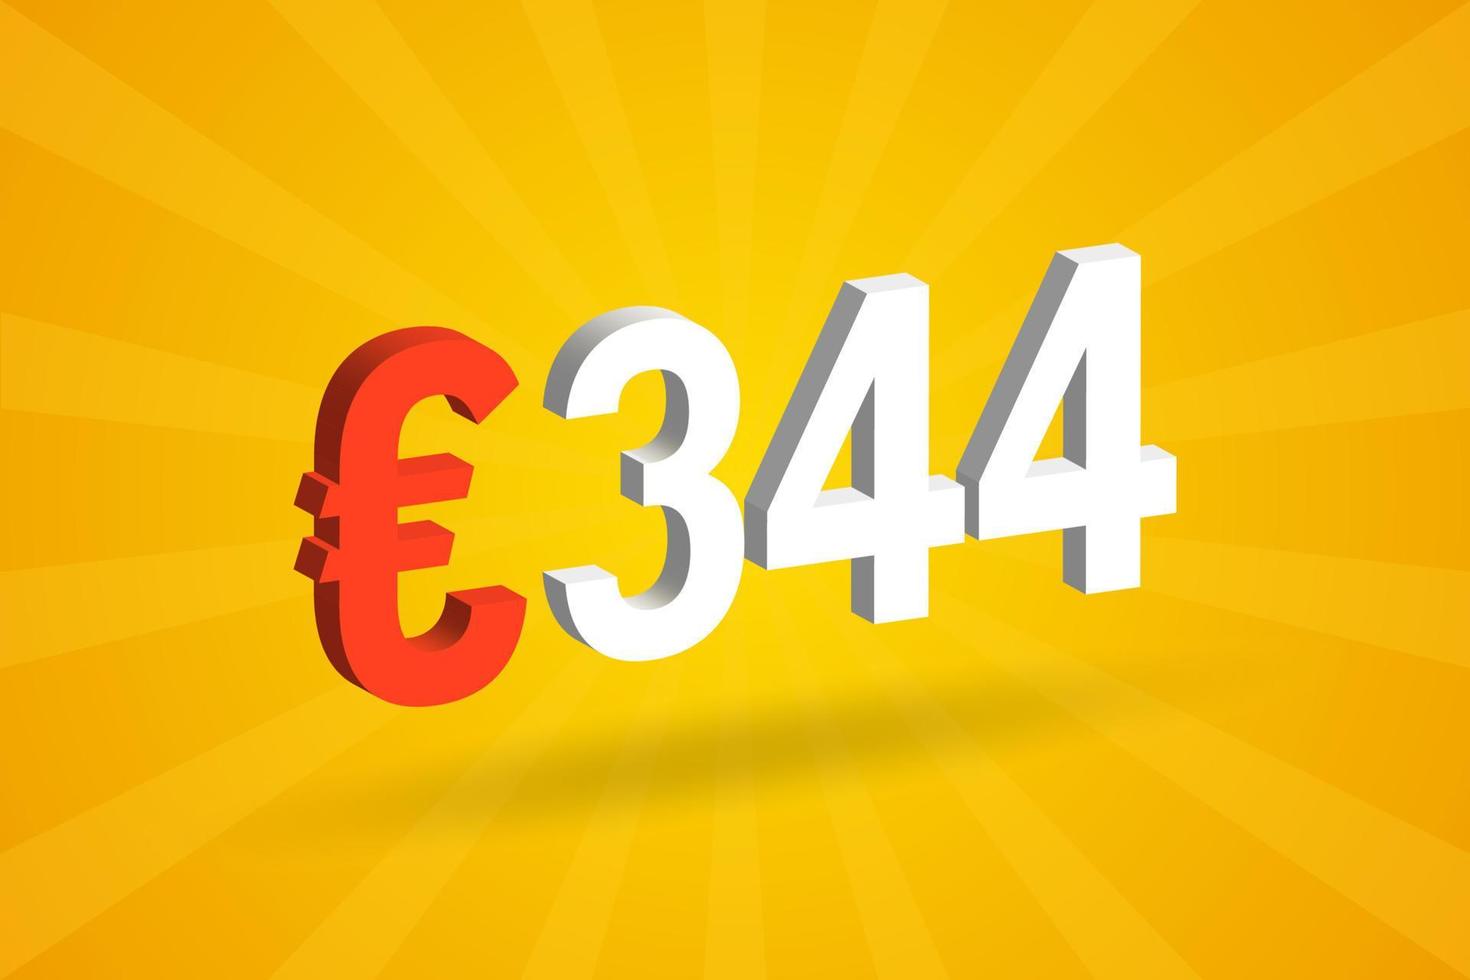 344 Euro Currency 3D vector text symbol. 3D 344 Euro European Union Money stock vector